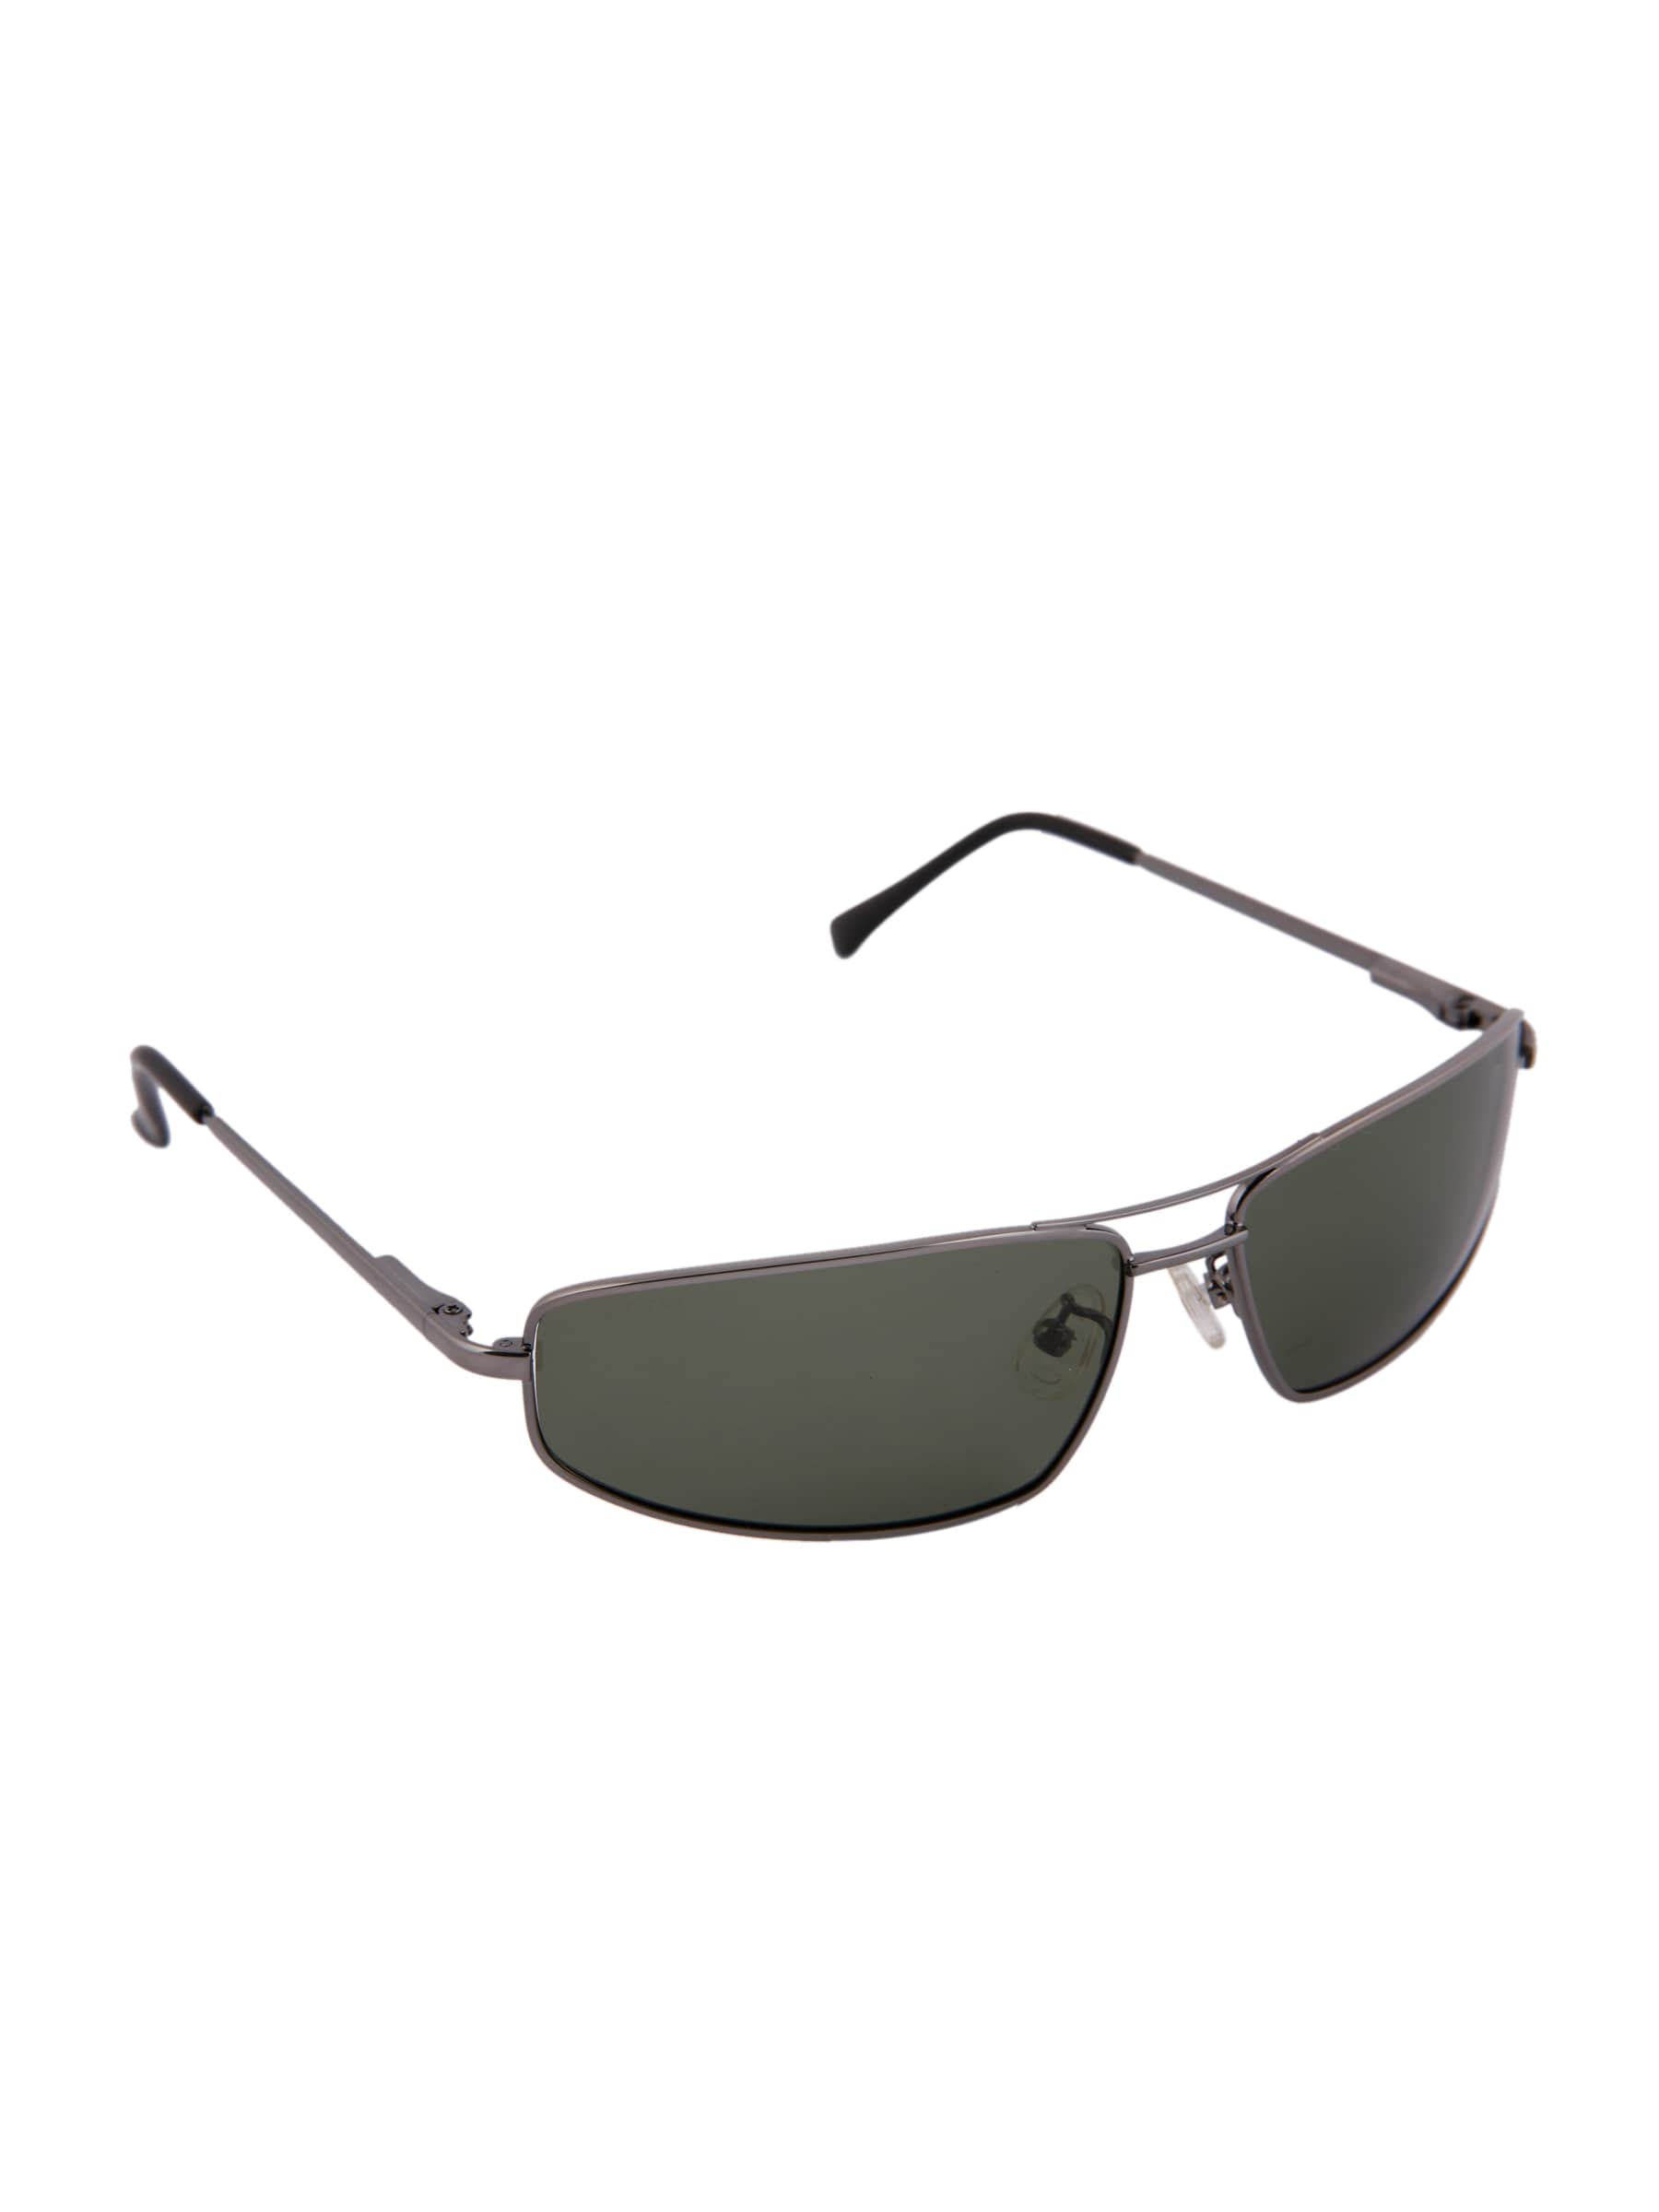 Fastrack Unisex Black Sunglasses